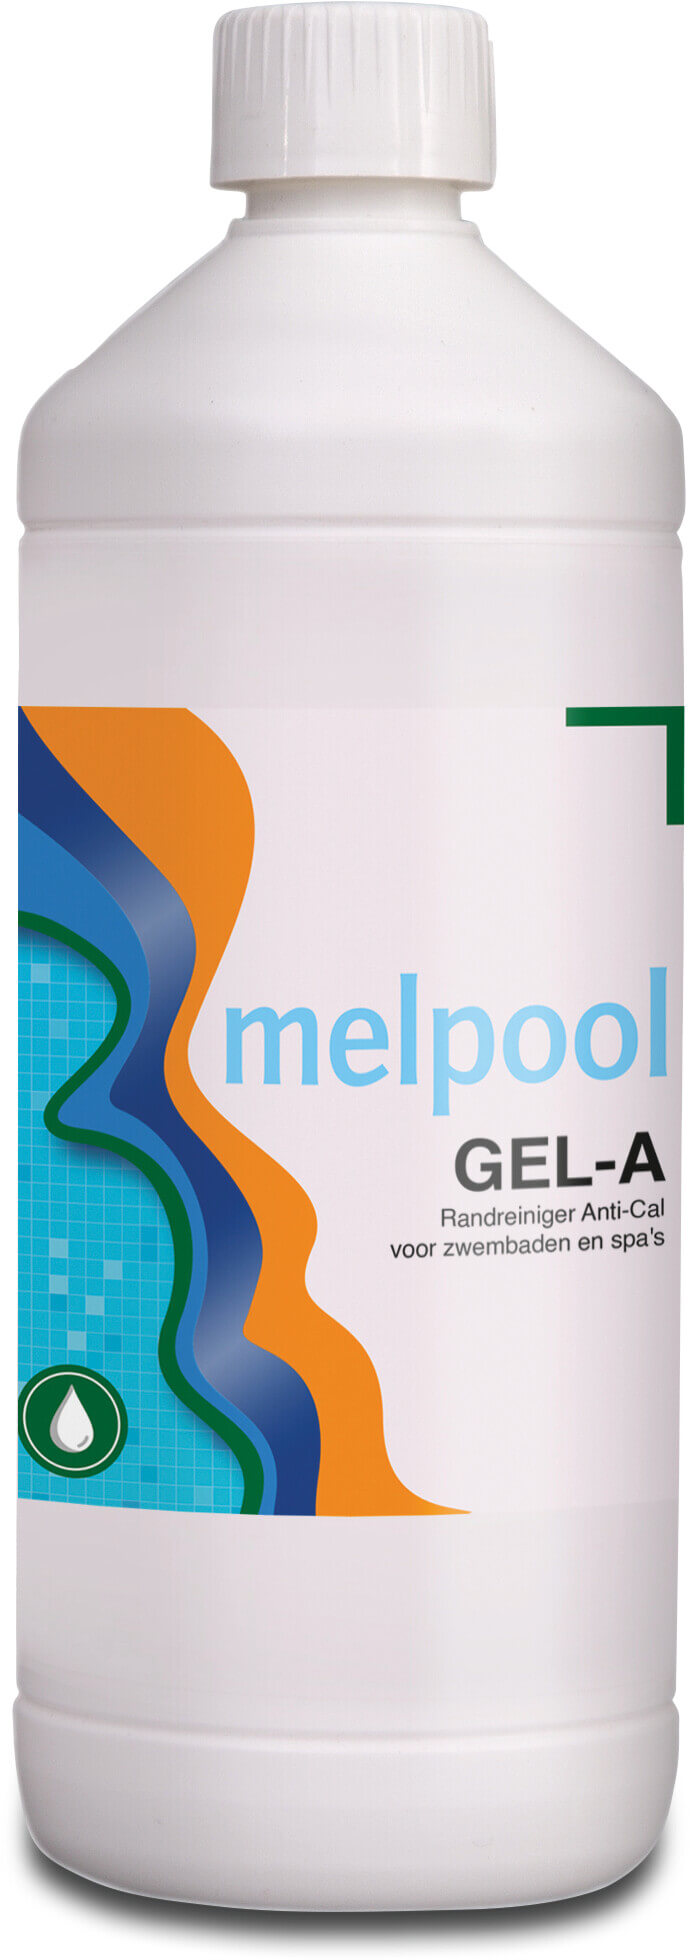 Melpool GEL-A Phosphoric acid solution 1ltr